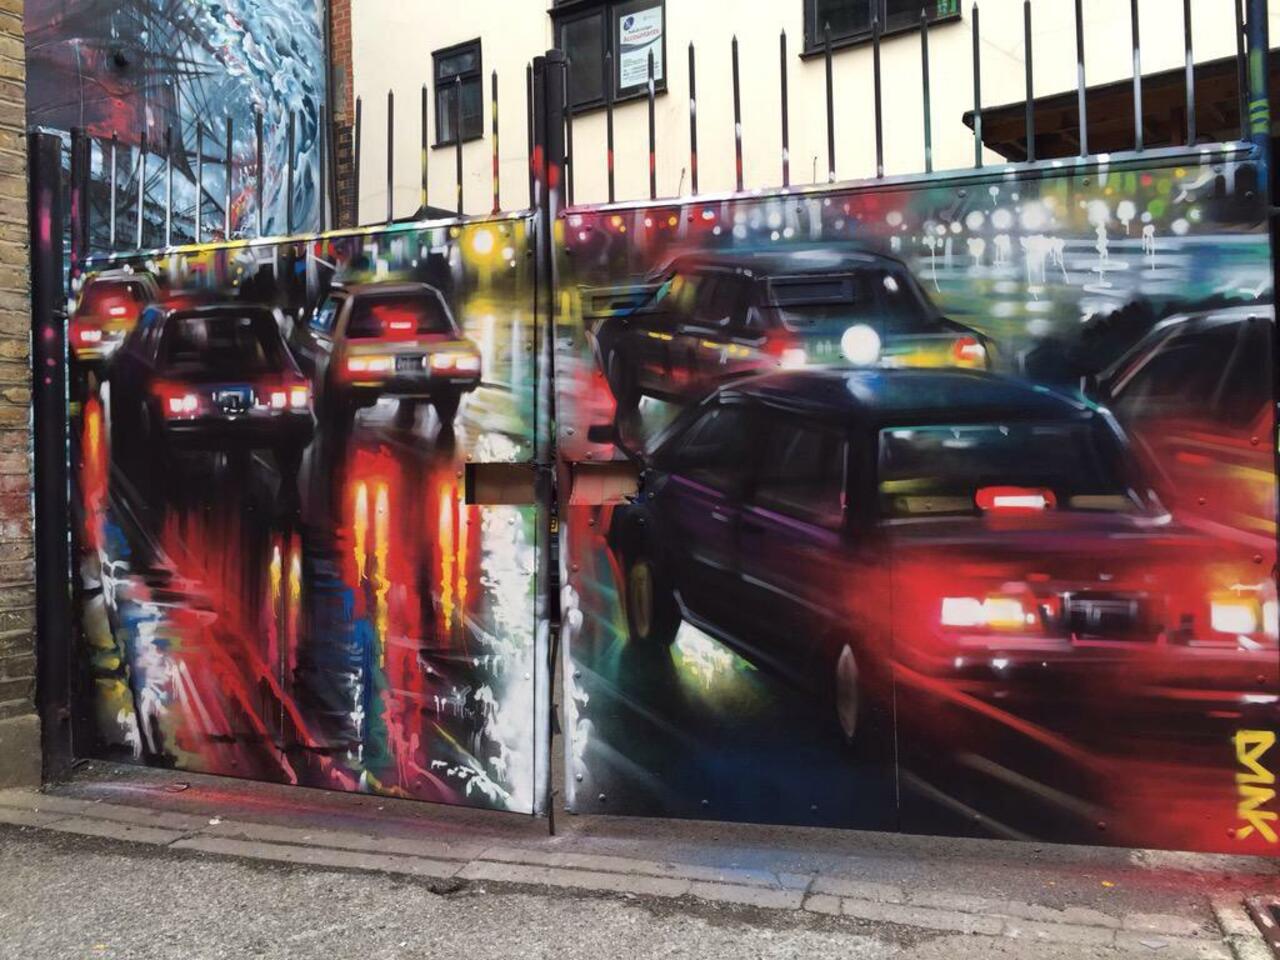 RT @KingDxQueenK: New Street Art by DanKitchener in Brick Lane London 

#art #graffiti #mural #streetart http://t.co/zYq7PBEvhH